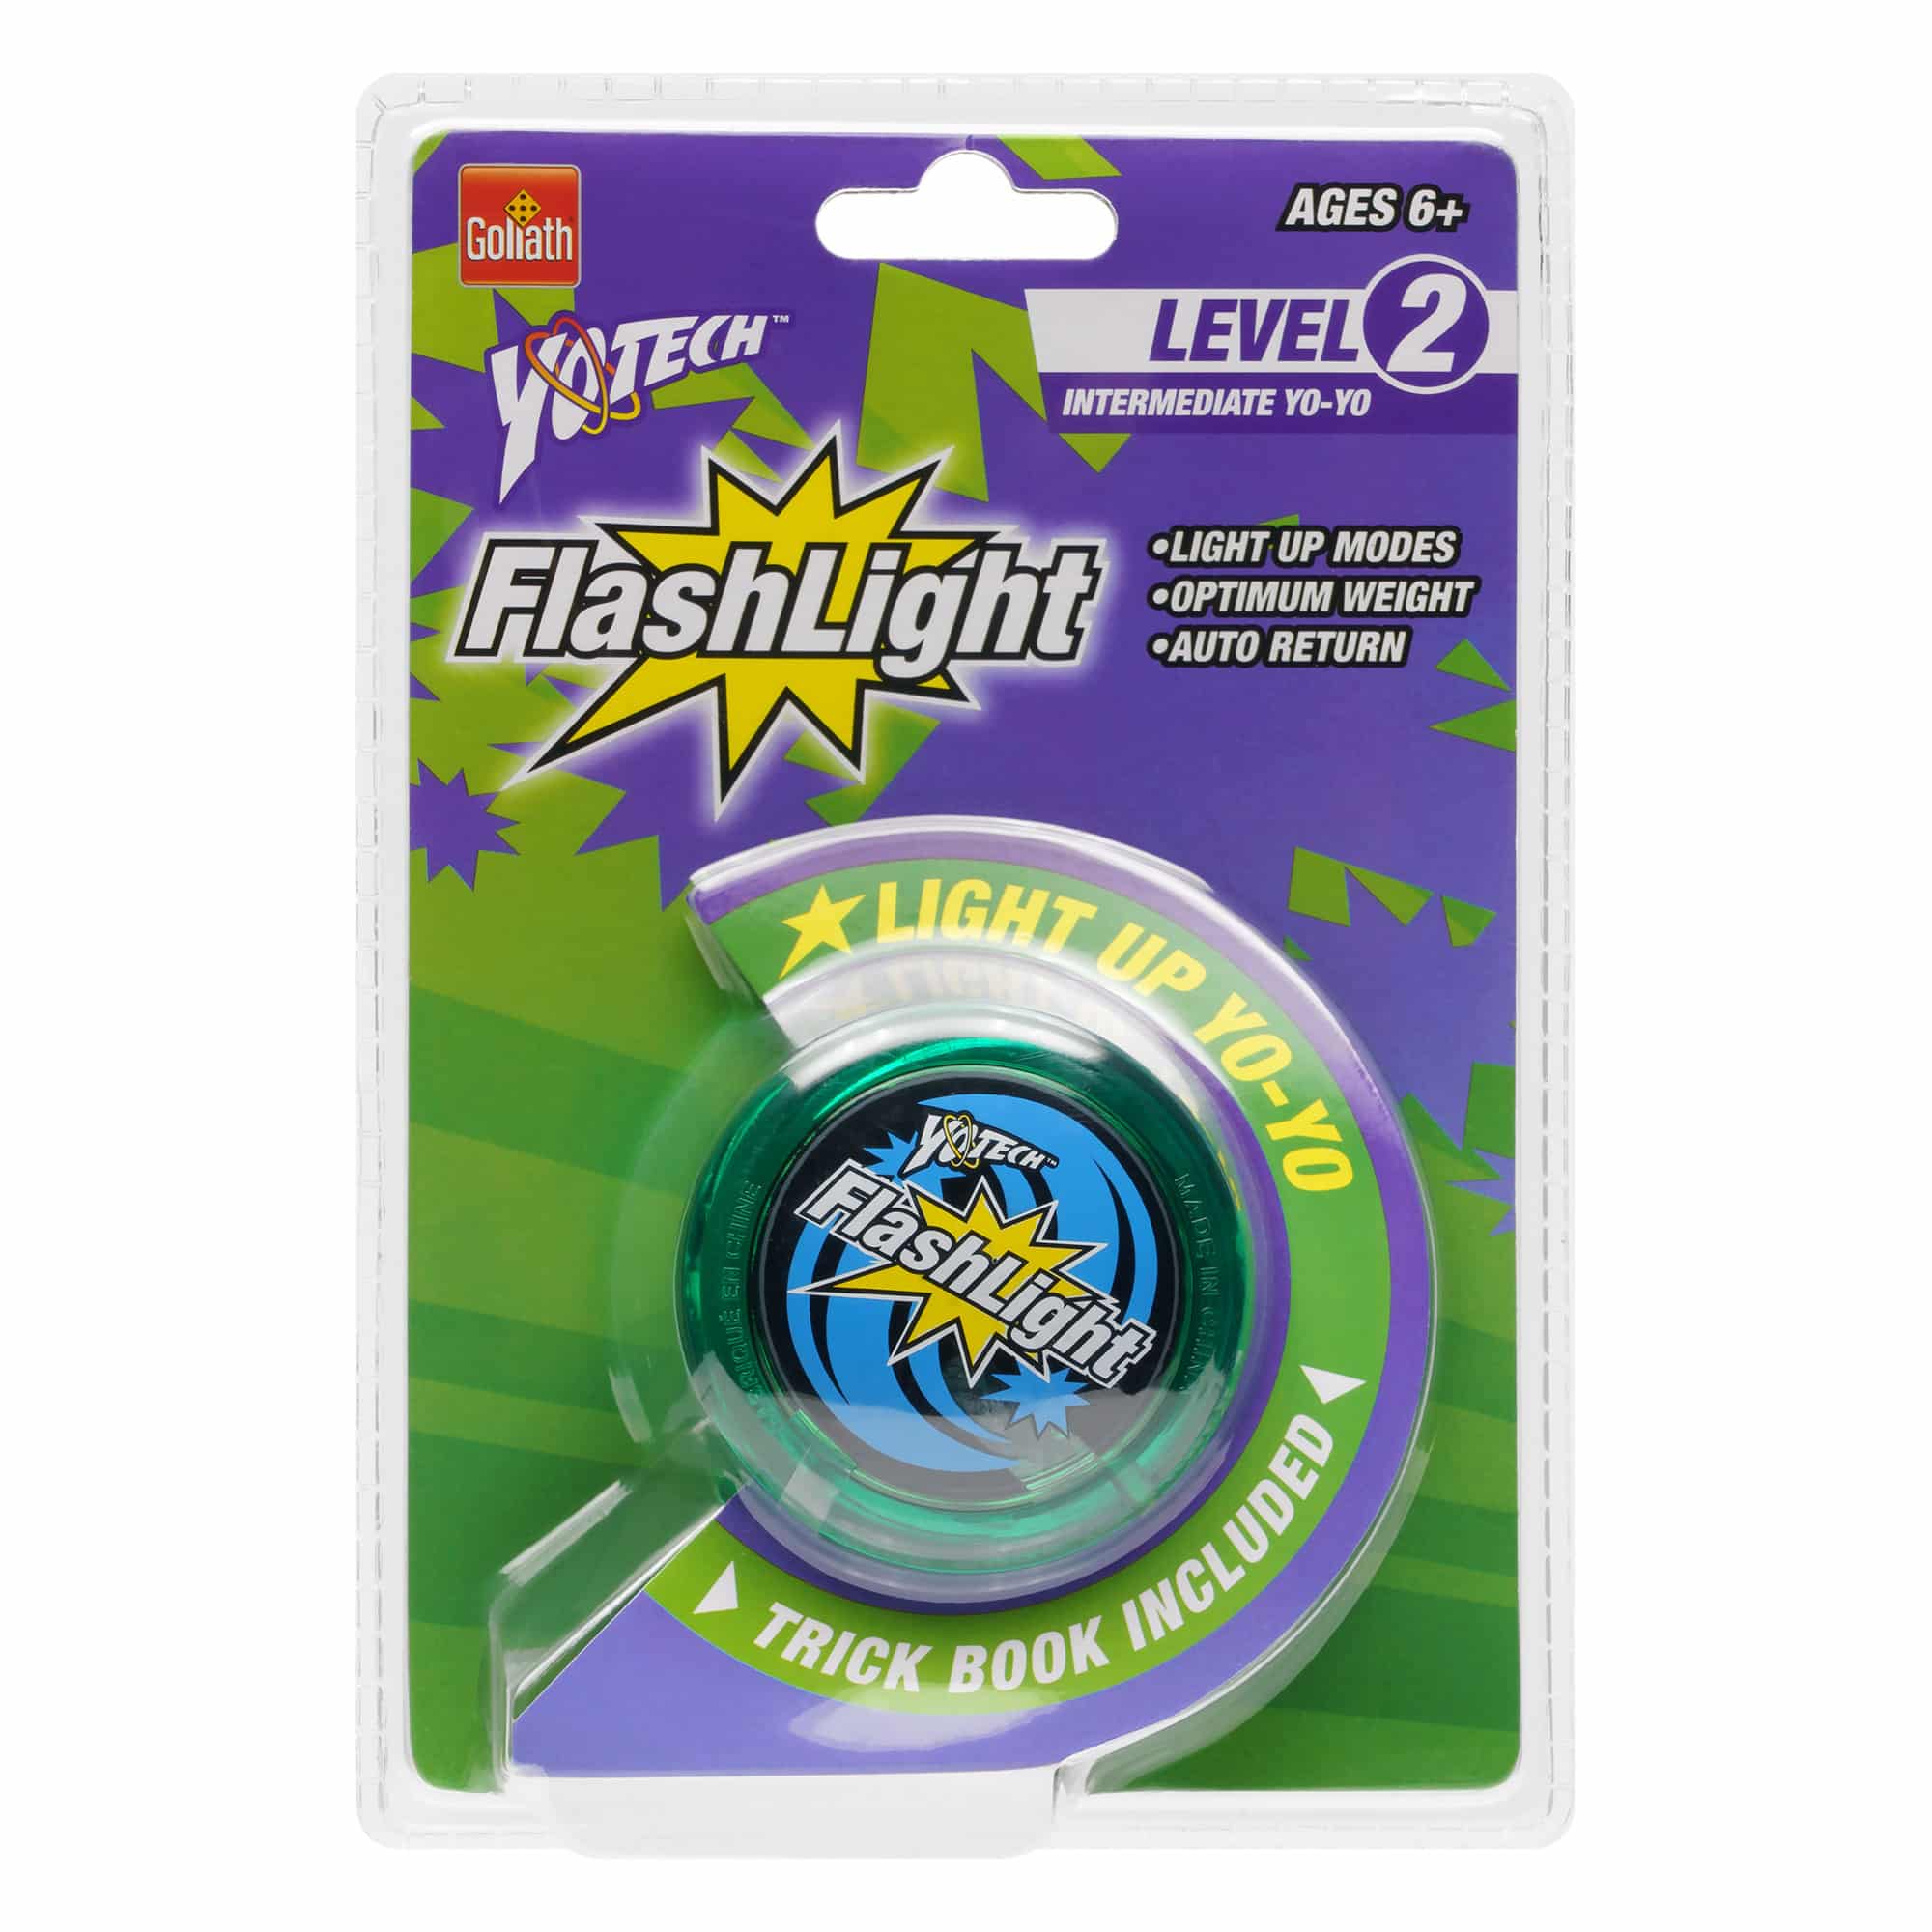 Yotech - FlashLIGHT Level 2 YoYo - Green